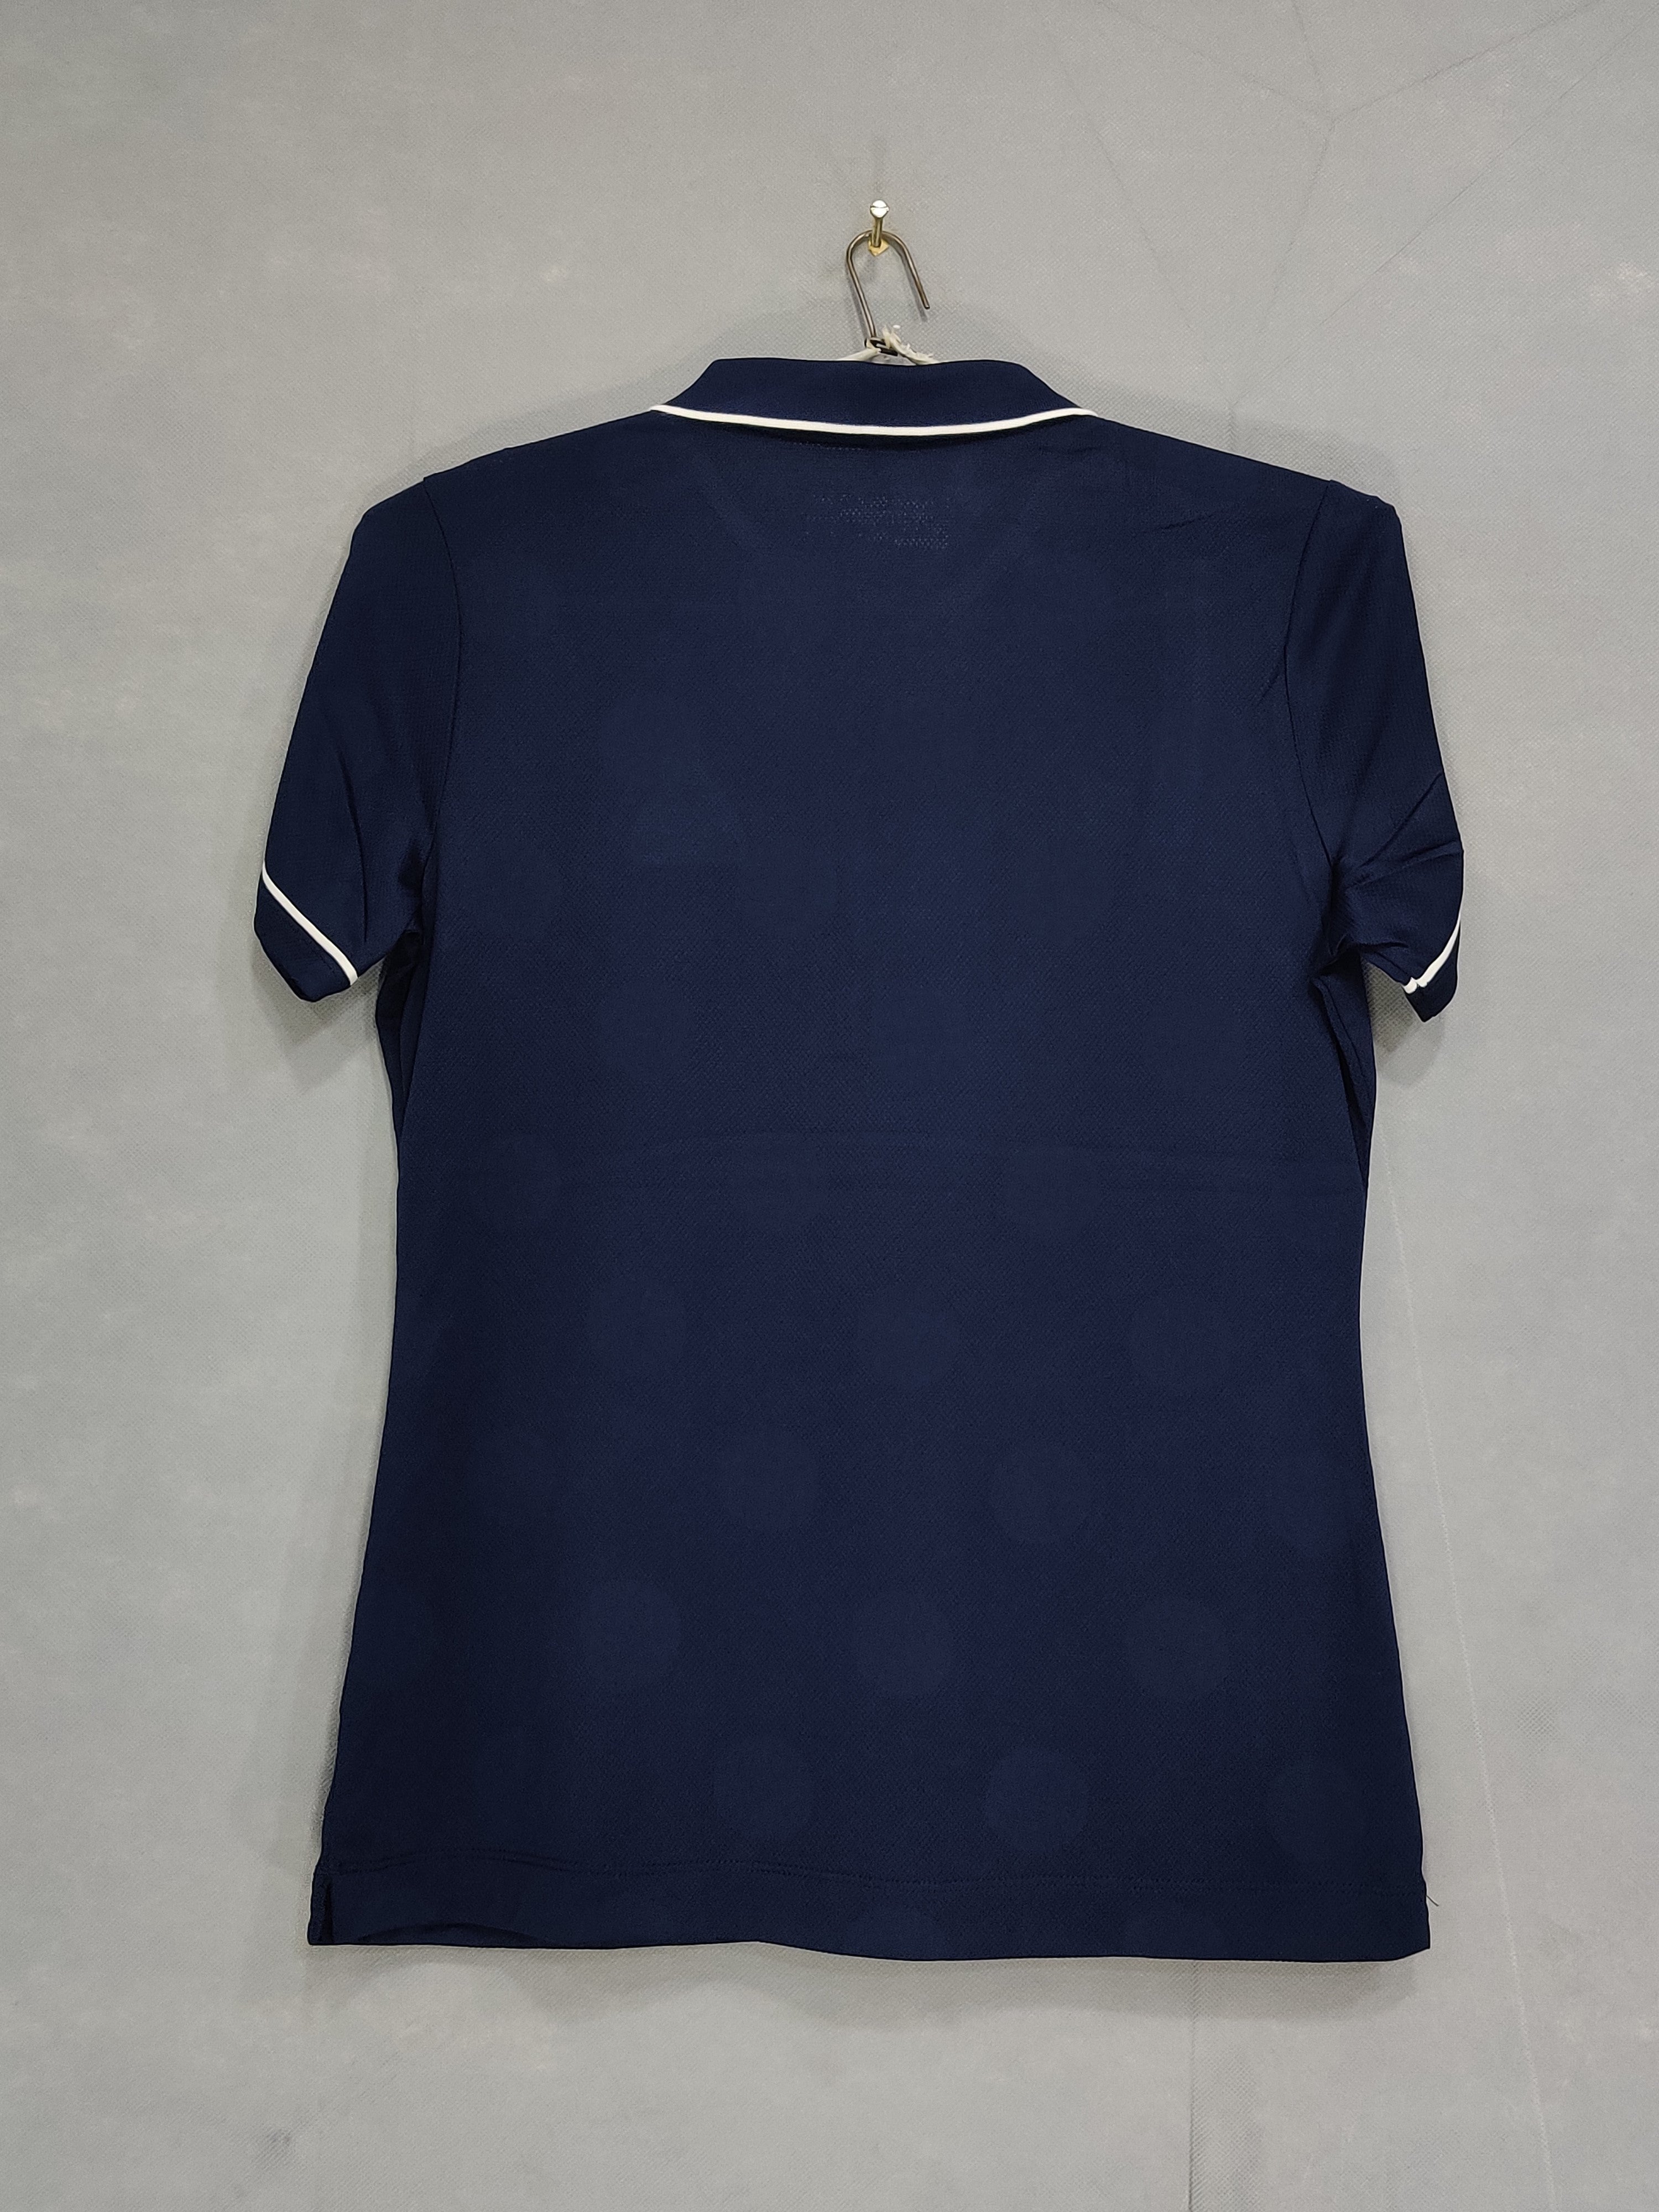 Nike Golf Branded Original For Sports Women Polo T Shirt